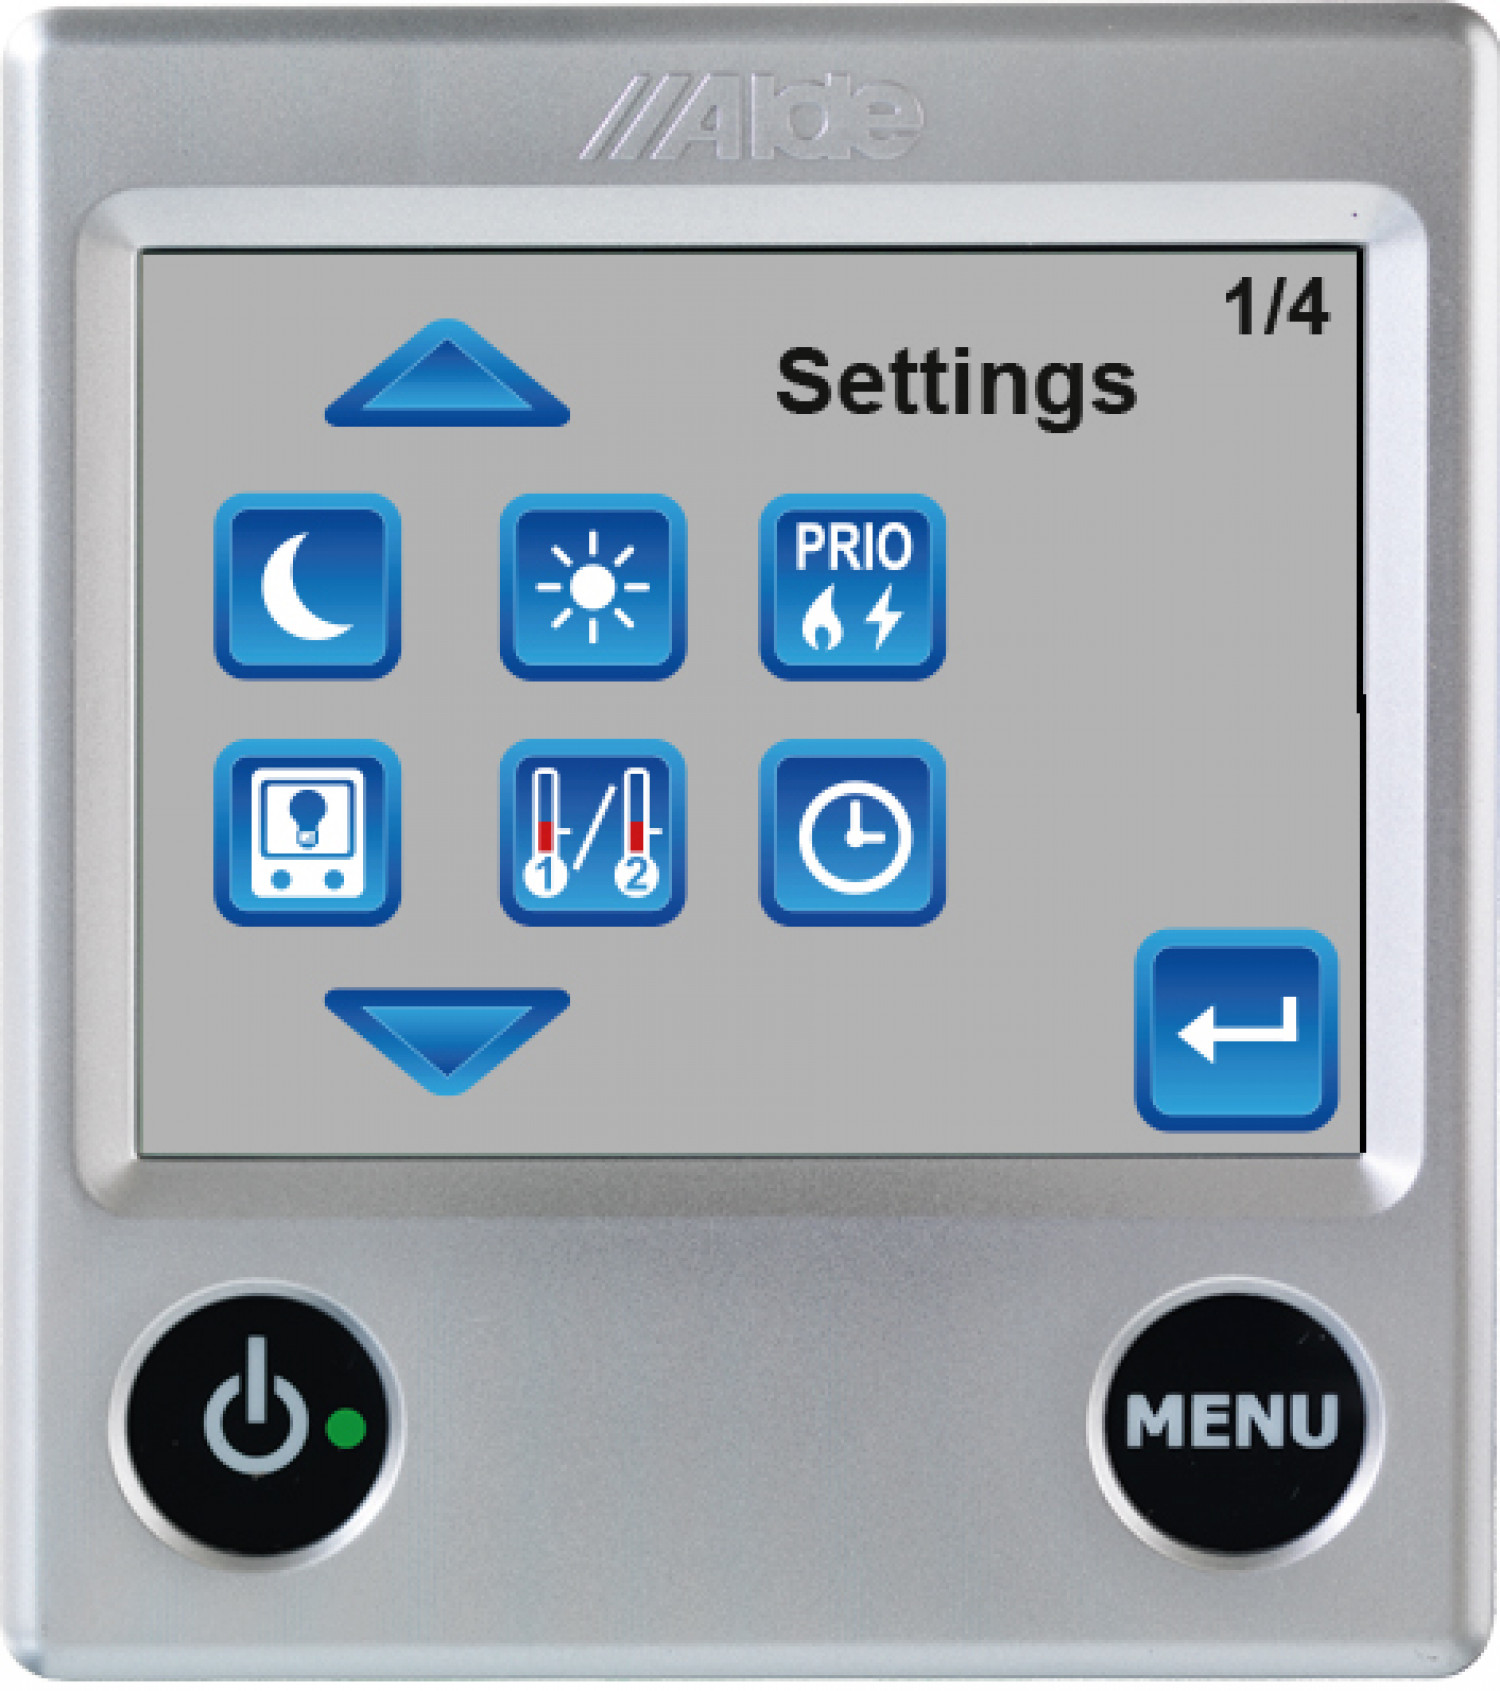 Alde Touchscreen Control Panel